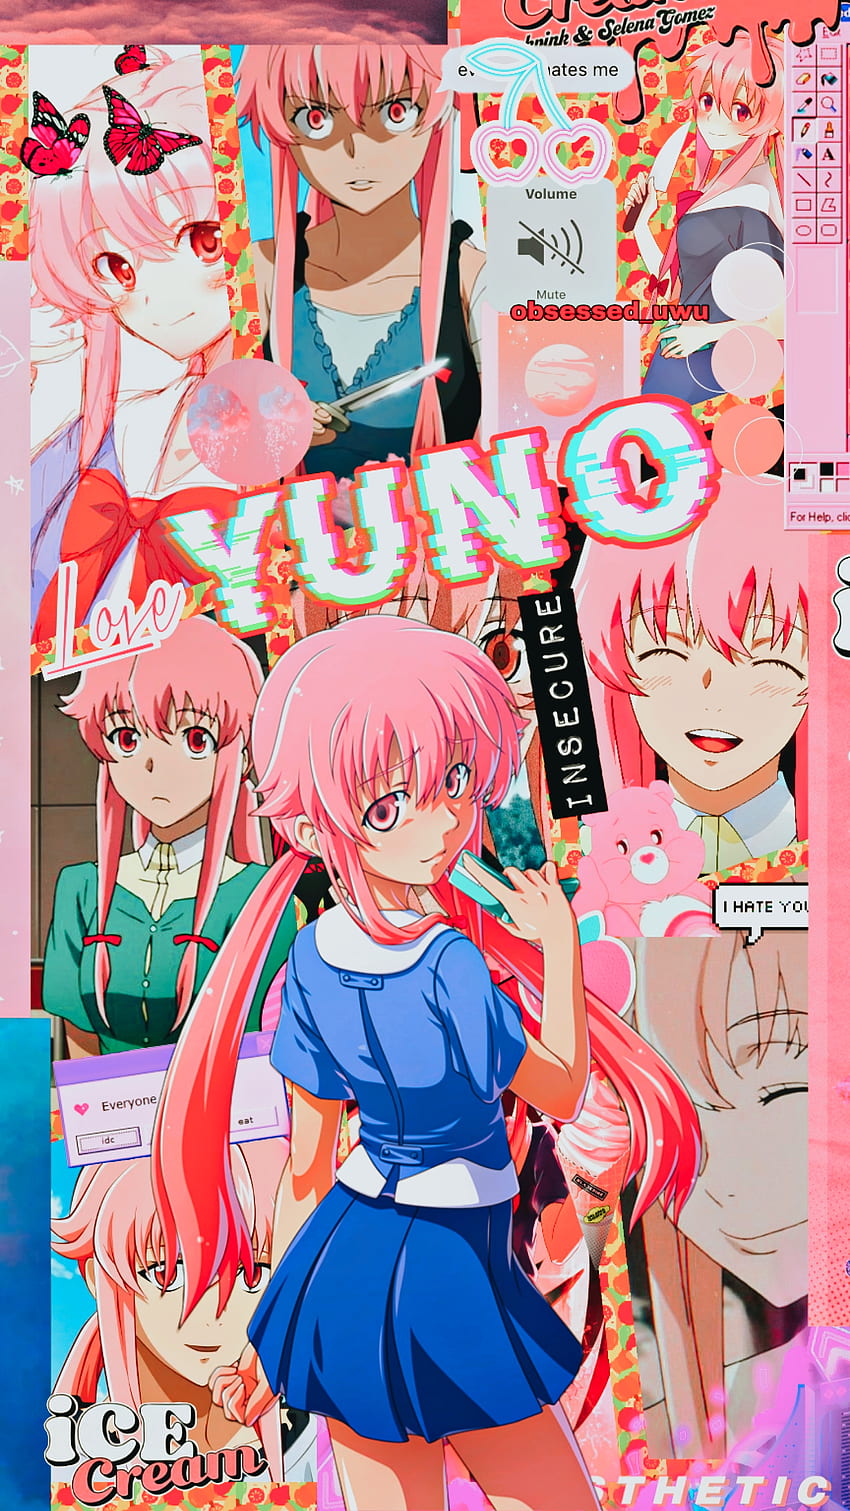 4512121 Gasai Yuno manga Mirai Nikki anime girls  Rare Gallery HD  Wallpapers